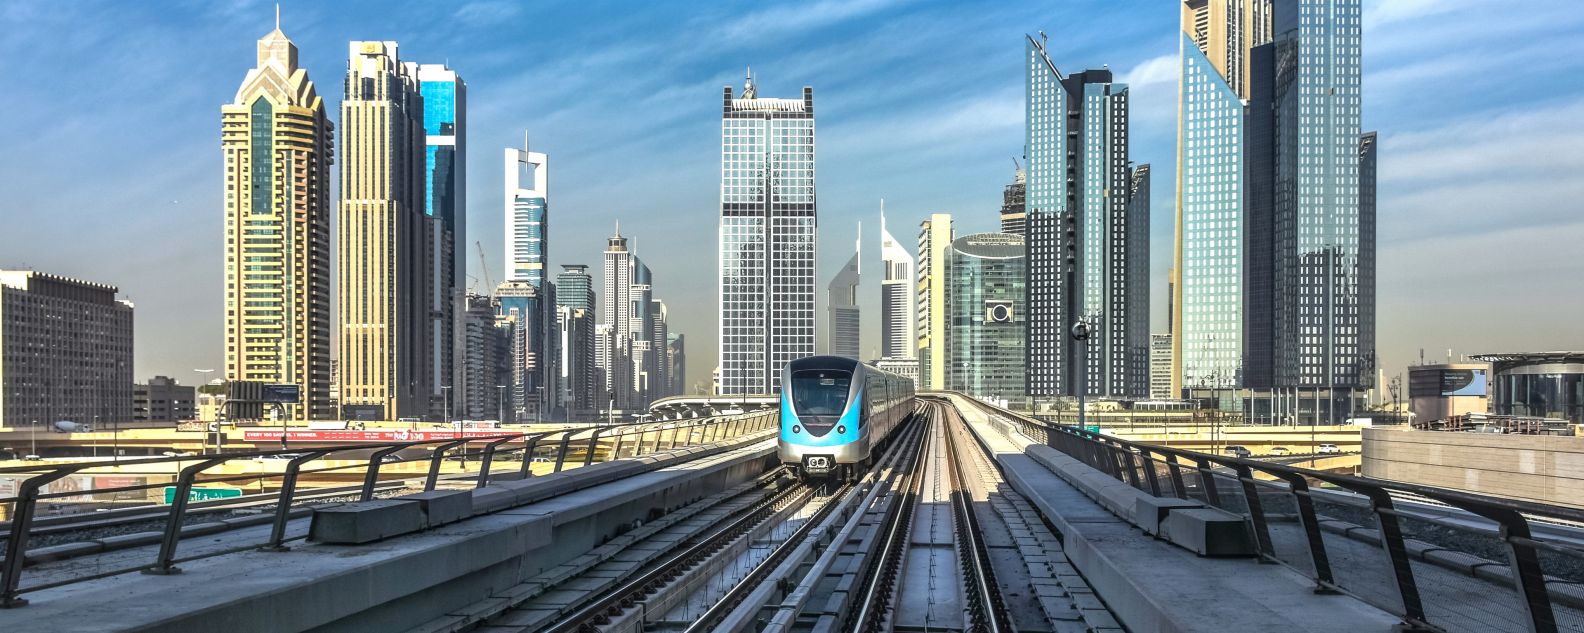 Driverless metro in Dubai approaching the subway station with futuristic city skyline on background in Dubai, United Arab Emirates, Persian Gulf.